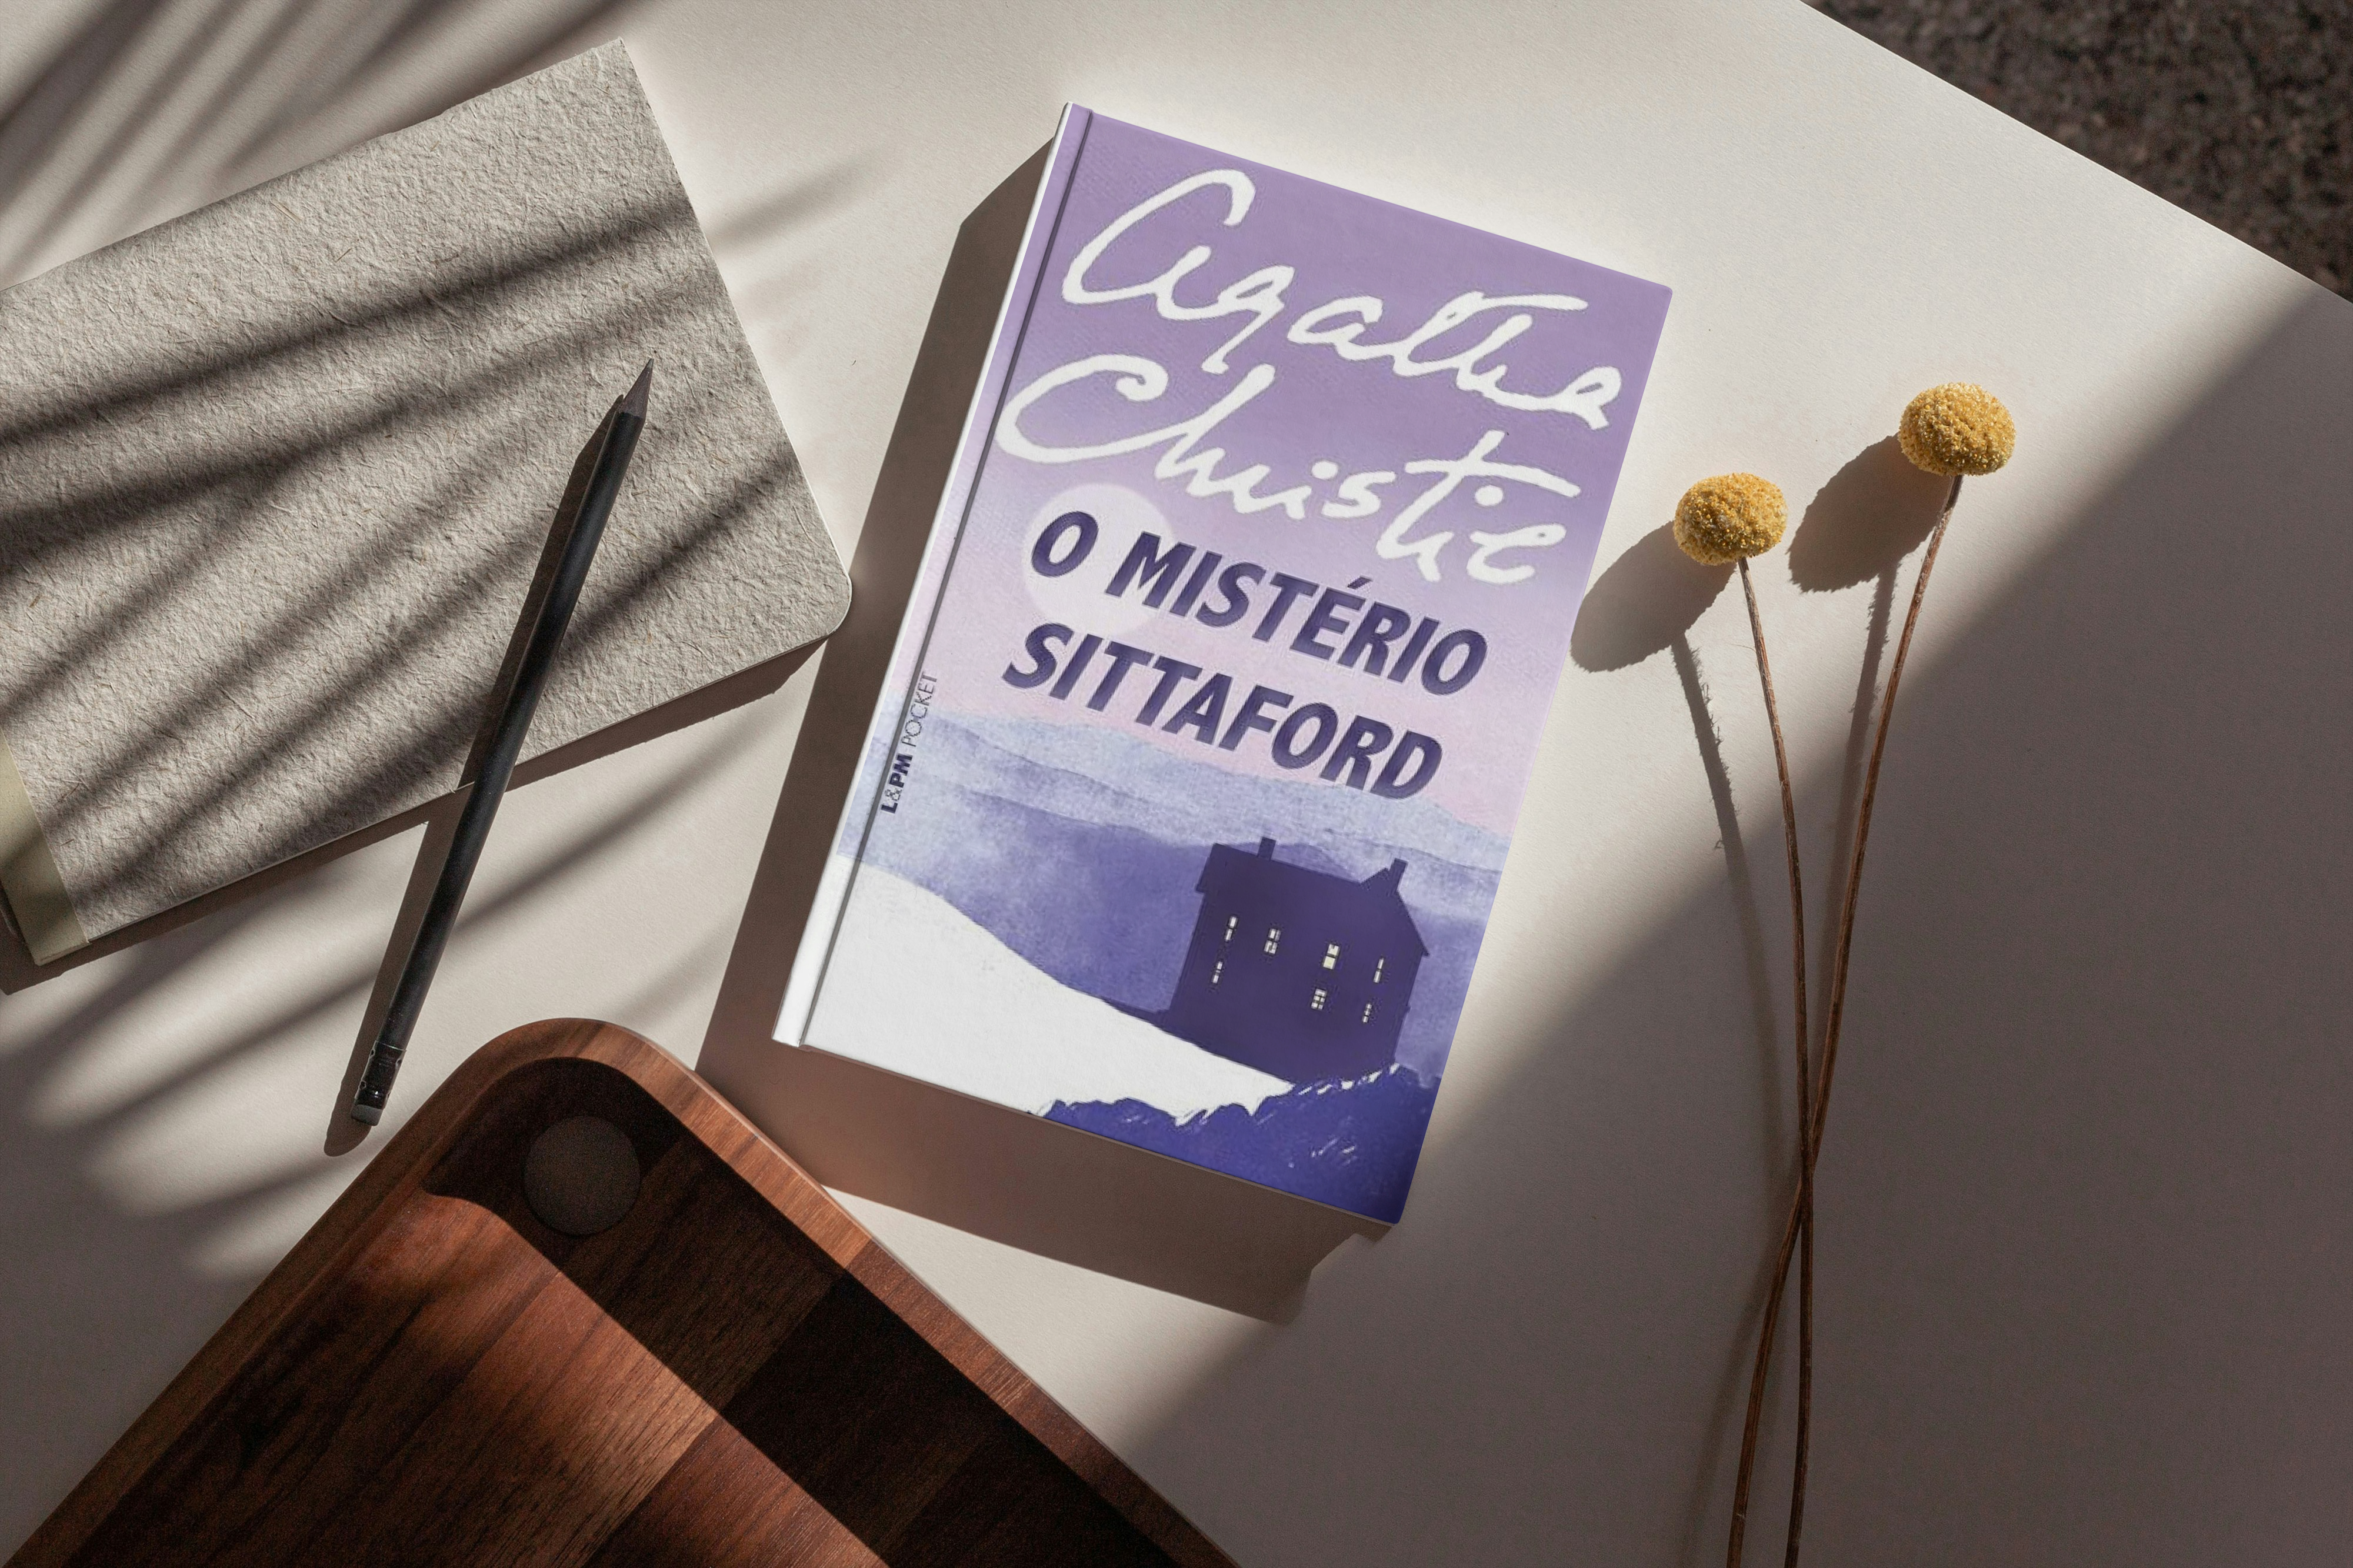 [RESENHA #833] O mistério Sittaford, de Agatha Christie